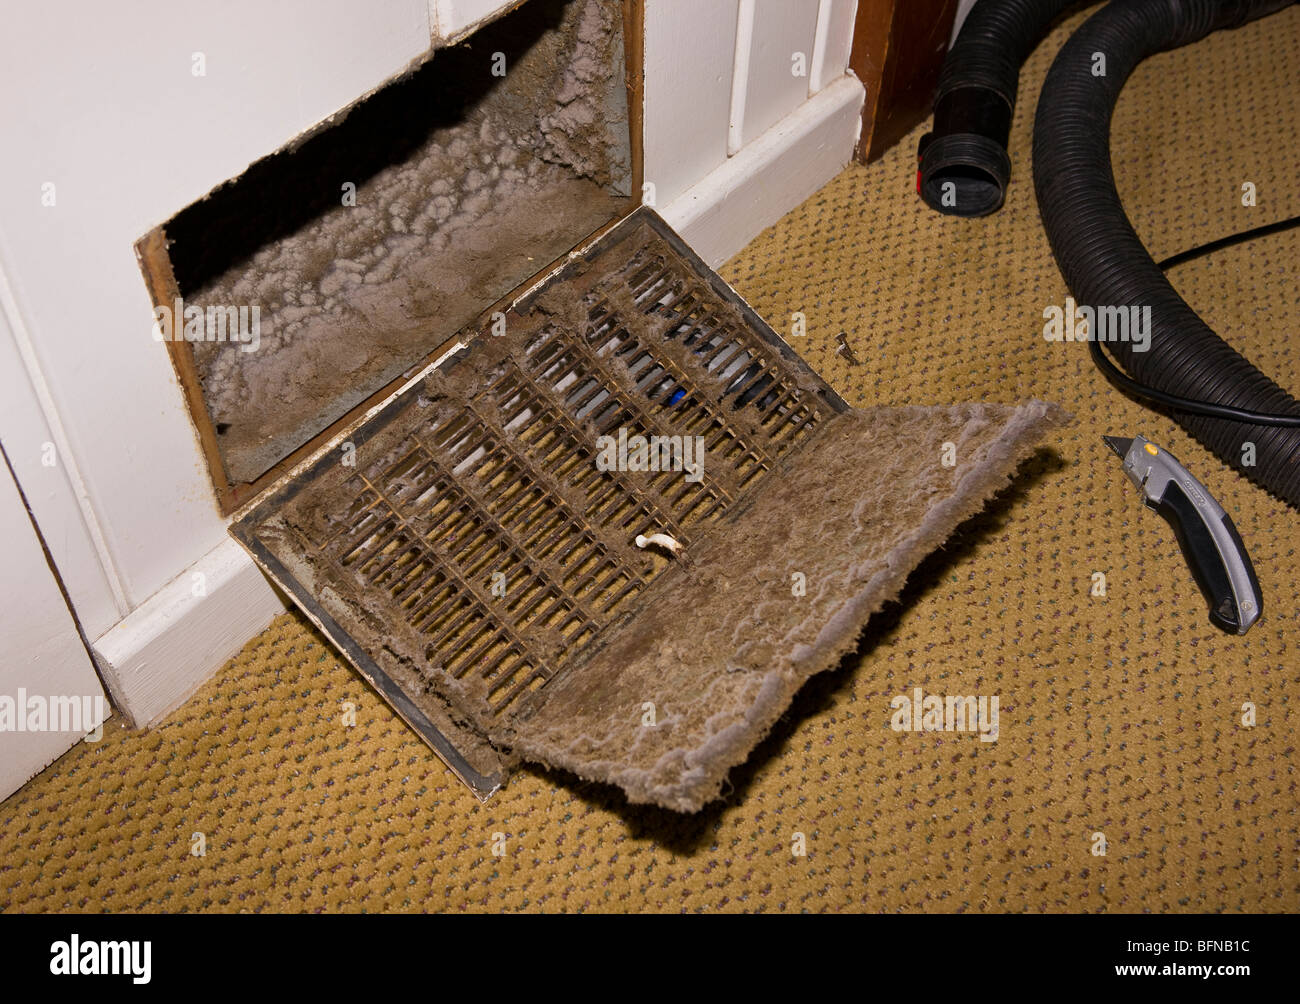 ARLINGTON, VIRGINIA, USA - Dust build up in house duct. Stock Photo